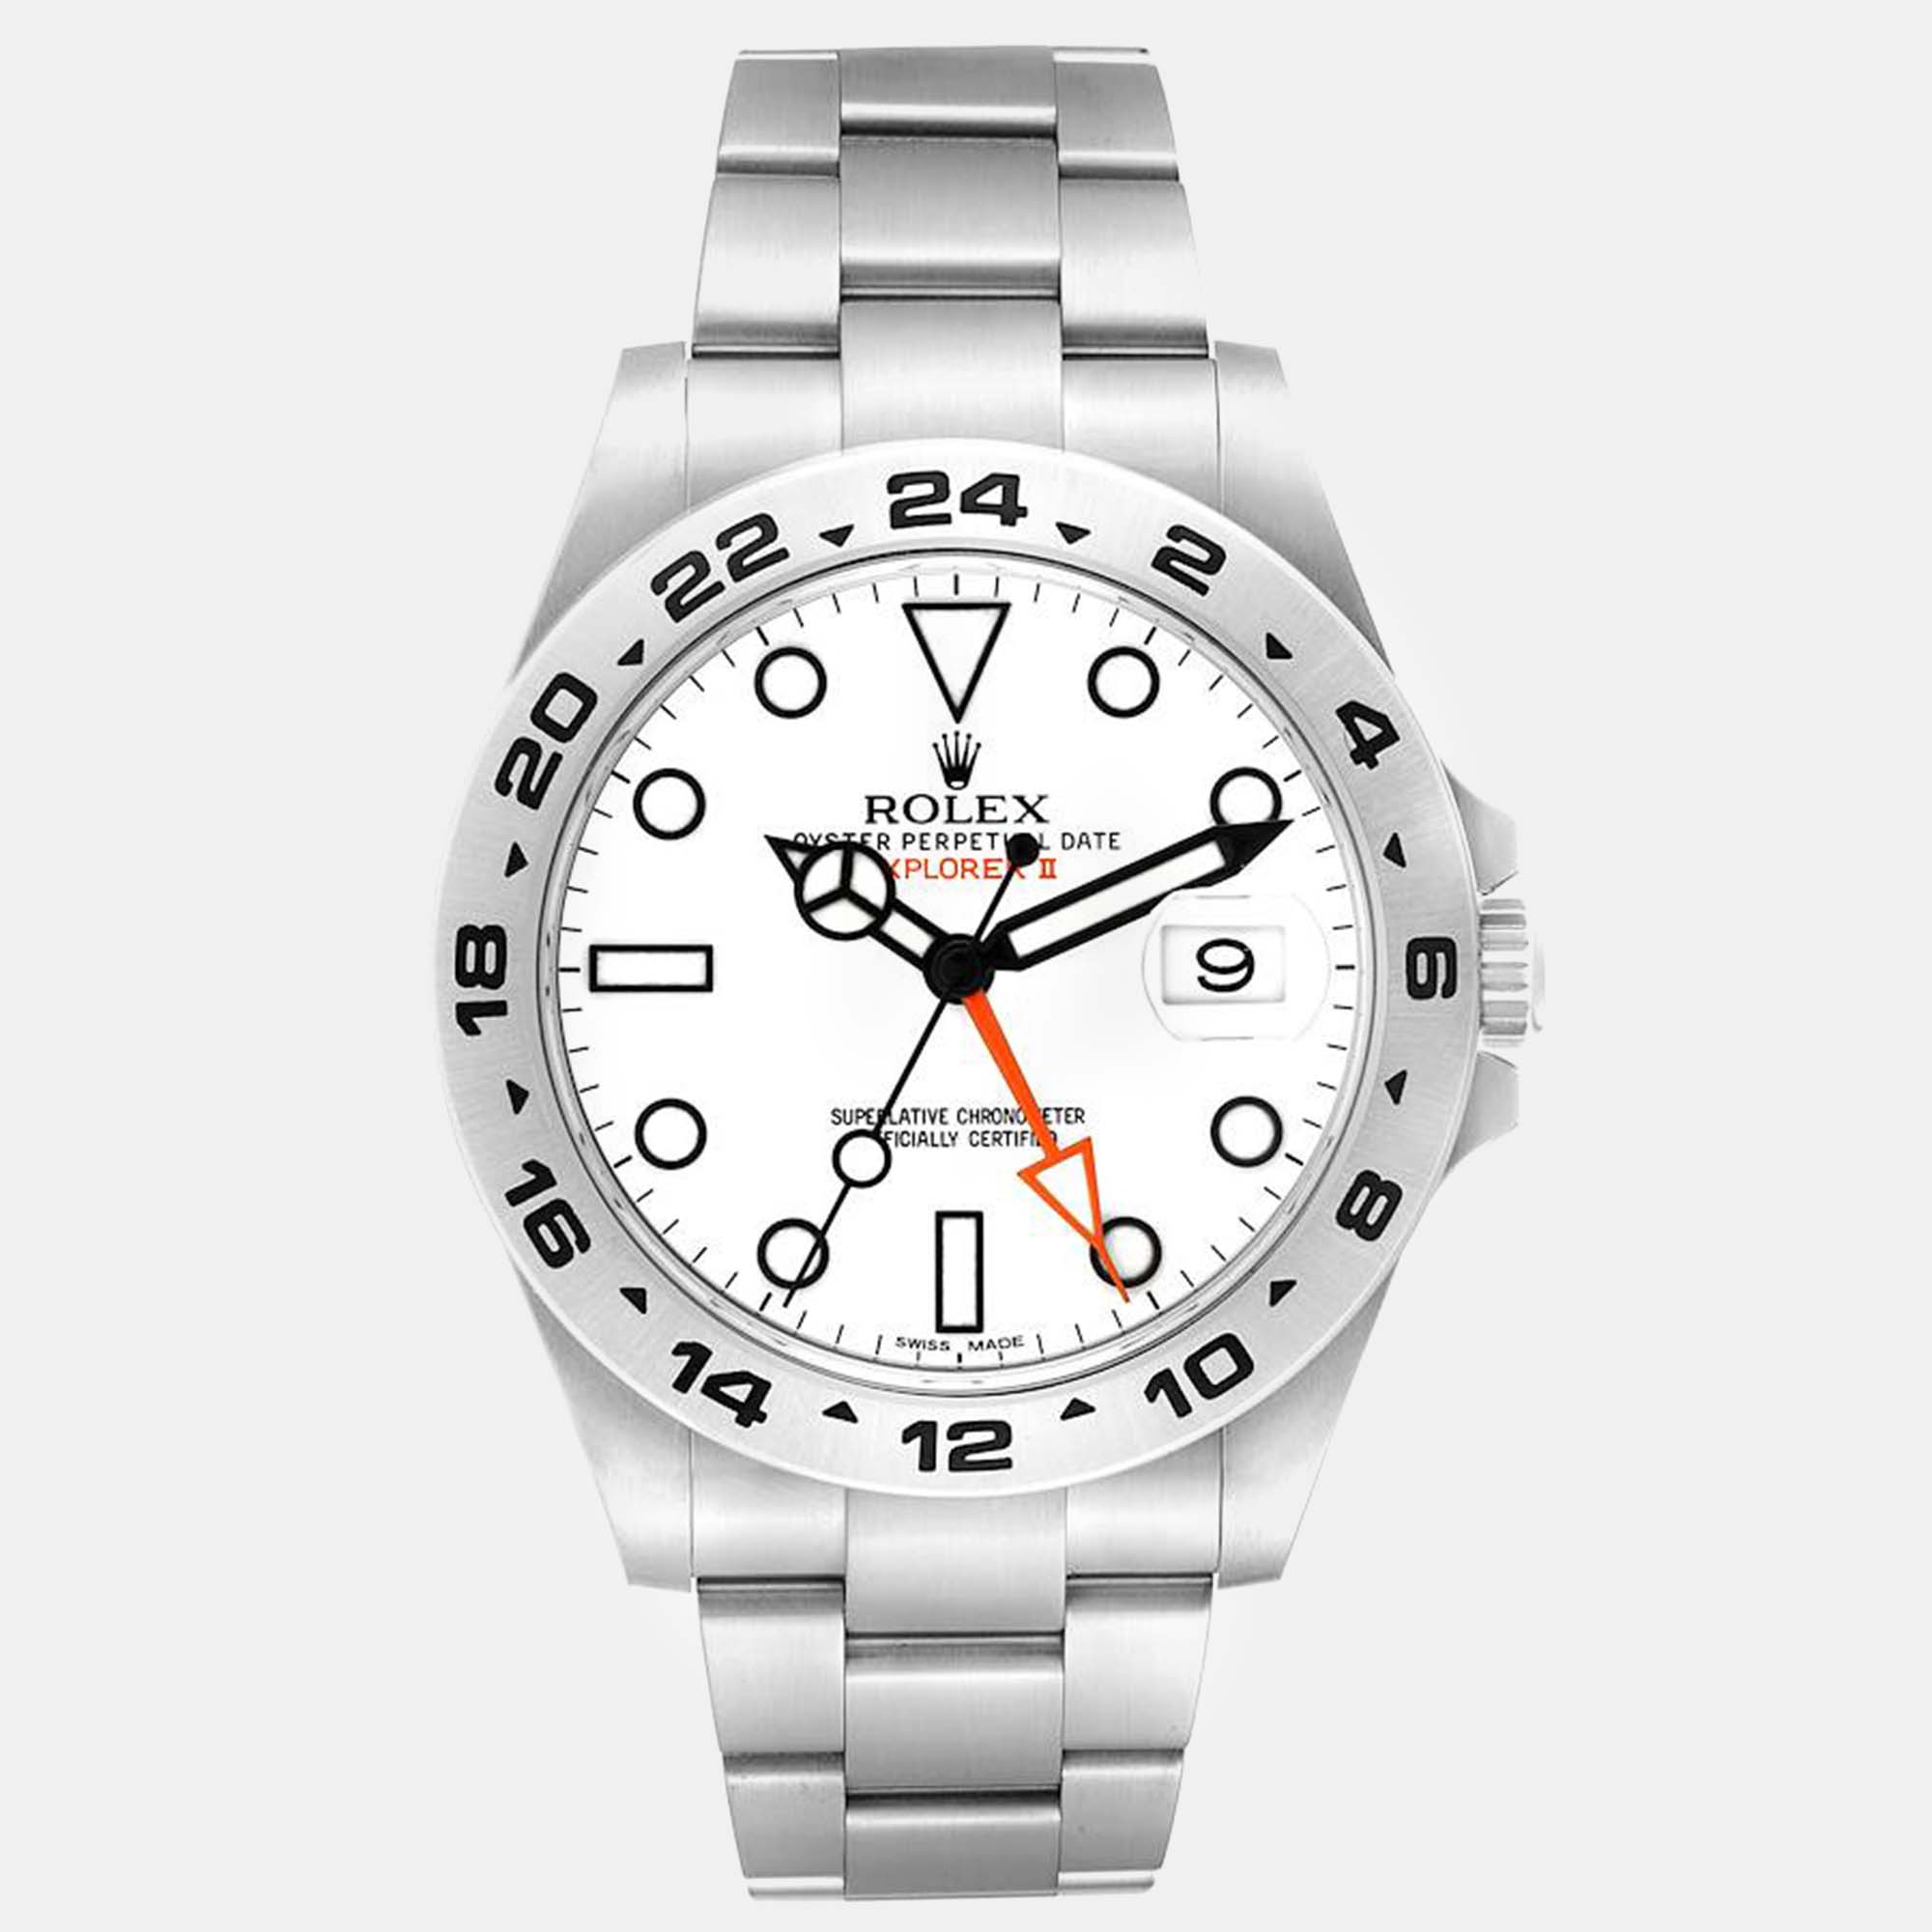 Rolex explorer ii white dial orange hand steel men's watch 42 mm